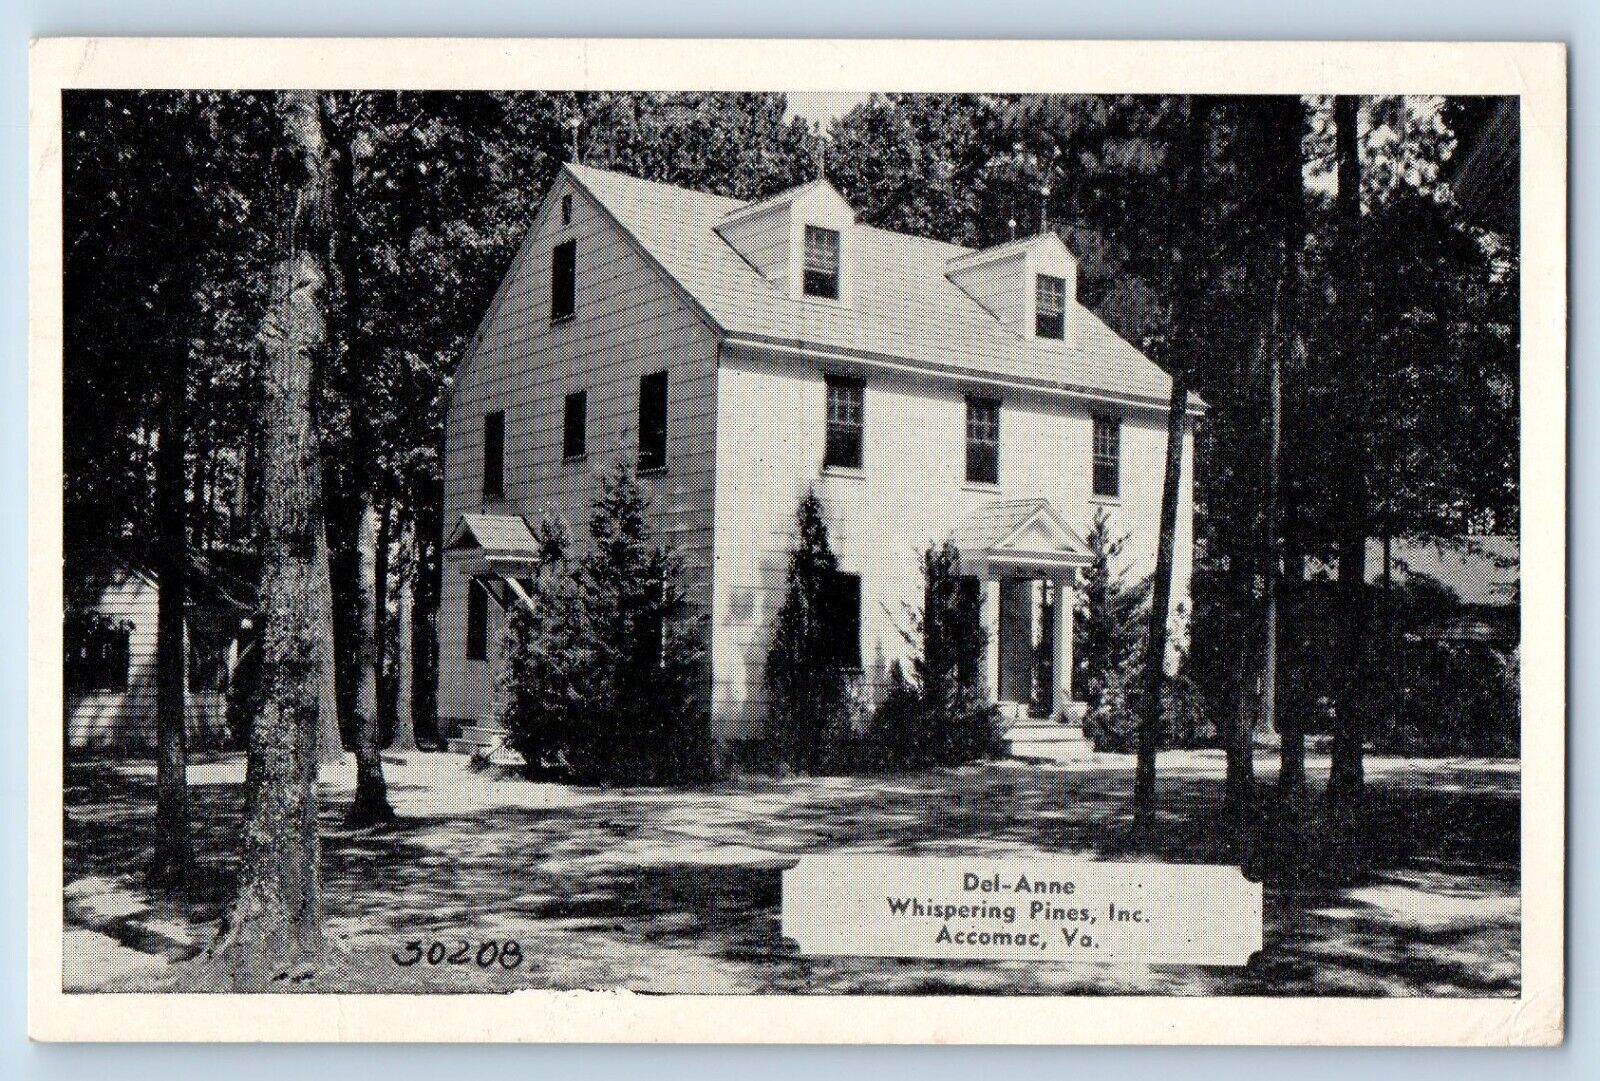 Accomac Virginia VA Postcard Del-Anne Whispering Pines Inc Building 1940 Vintage